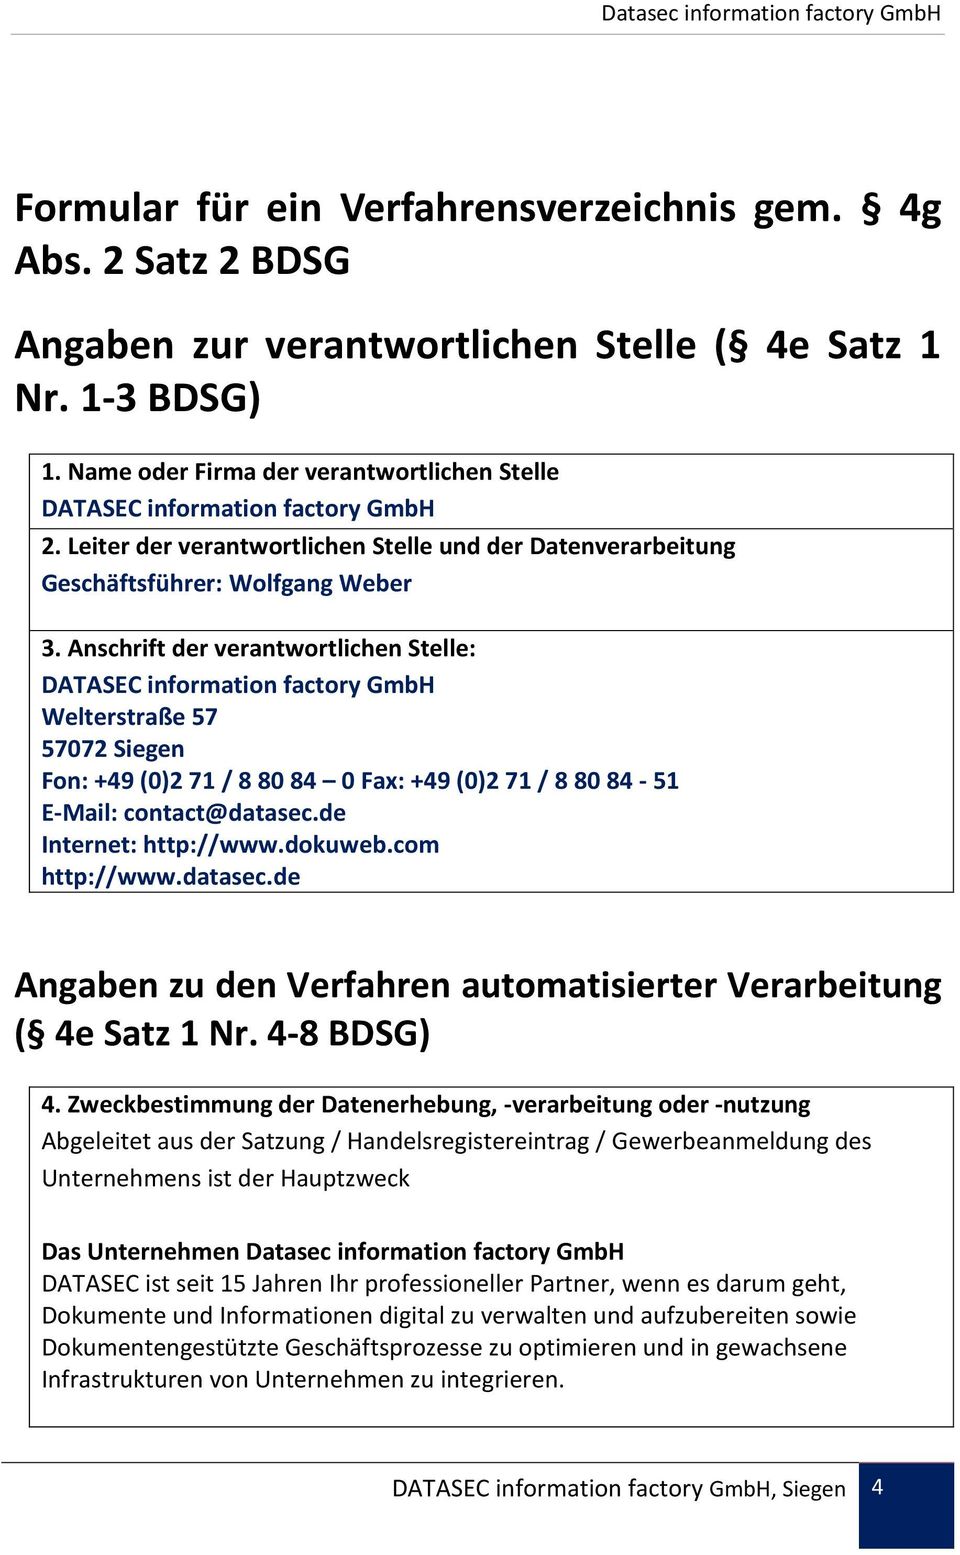 Anschrift der verantwortlichen Stelle: DATASEC information factory GmbH Welterstraße 57 57072 Siegen Fon: +49 (0)2 71 / 8 80 84 0 Fax: +49 (0)2 71 / 8 80 84-51 E-Mail: contact@datasec.